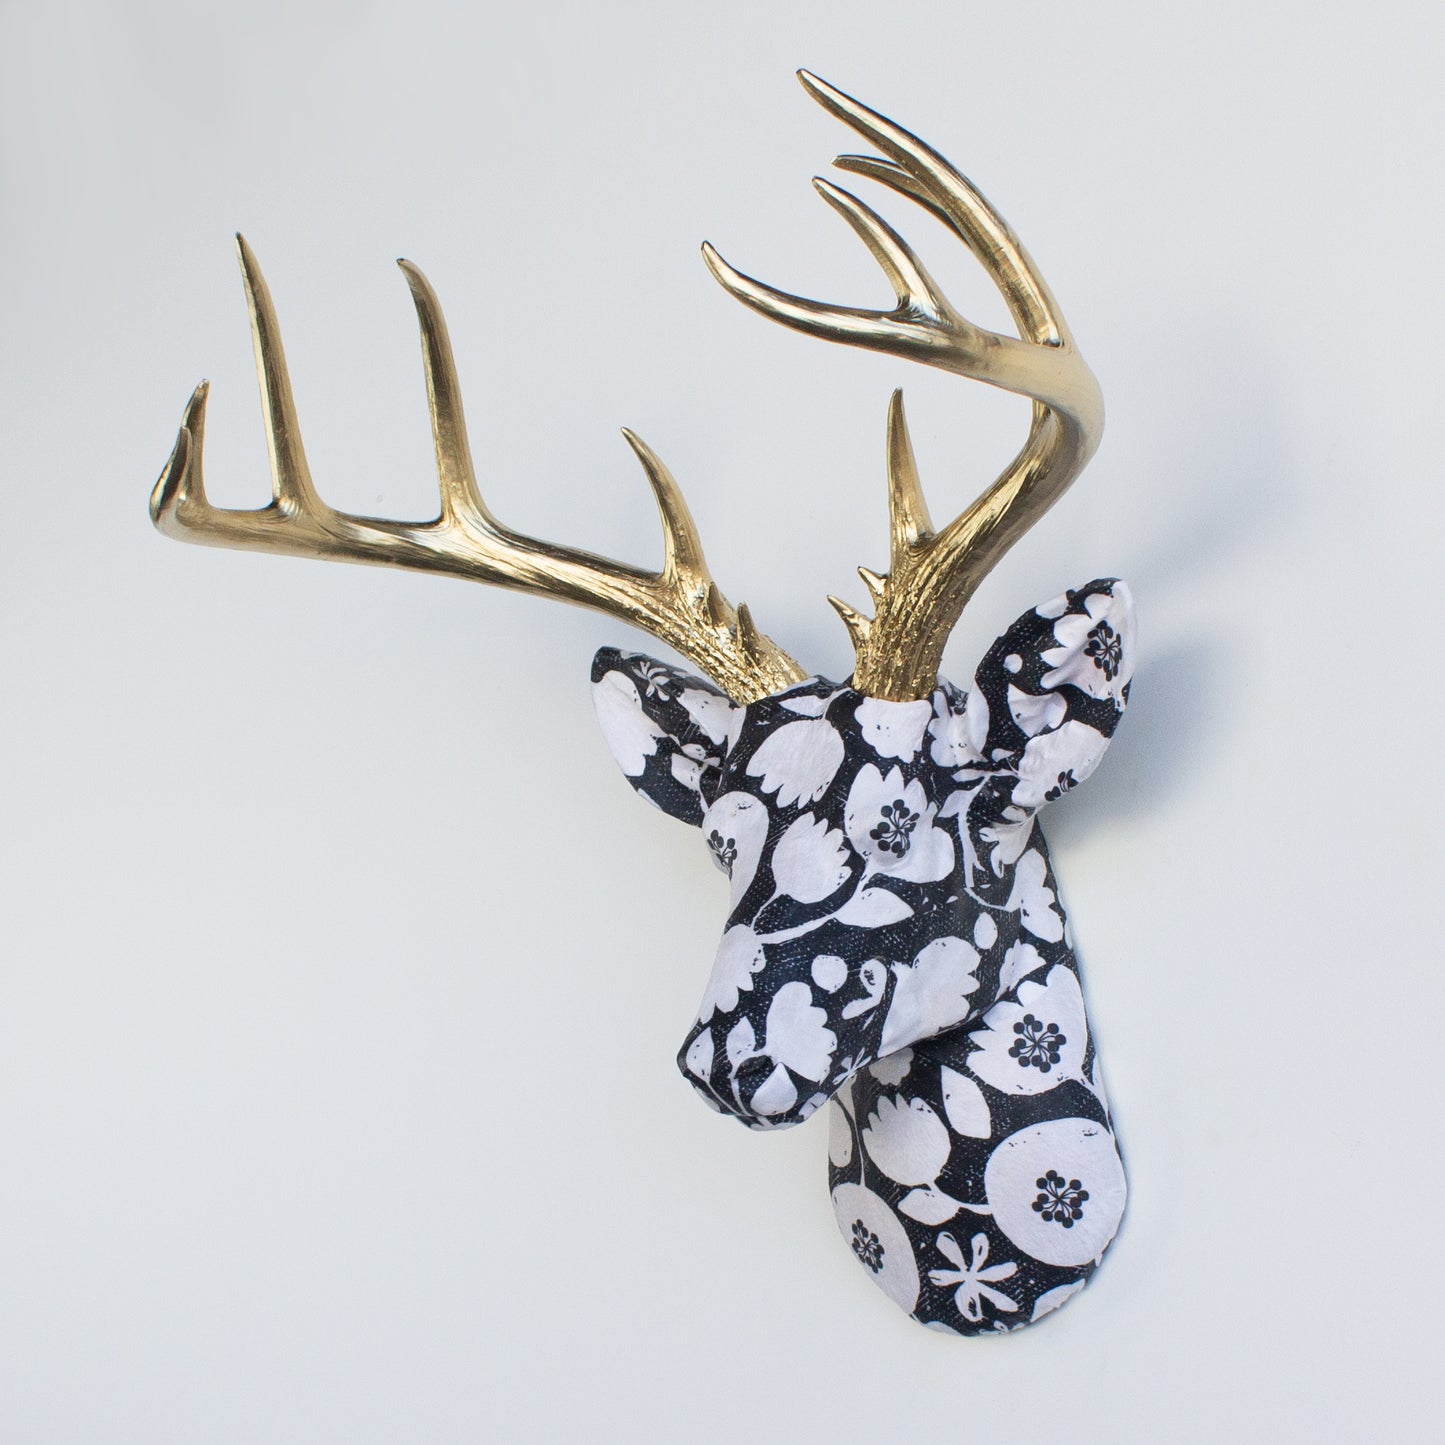 Fabric Deer Head - Black & White Flower Fabric Deer Head Fabric Deer Head